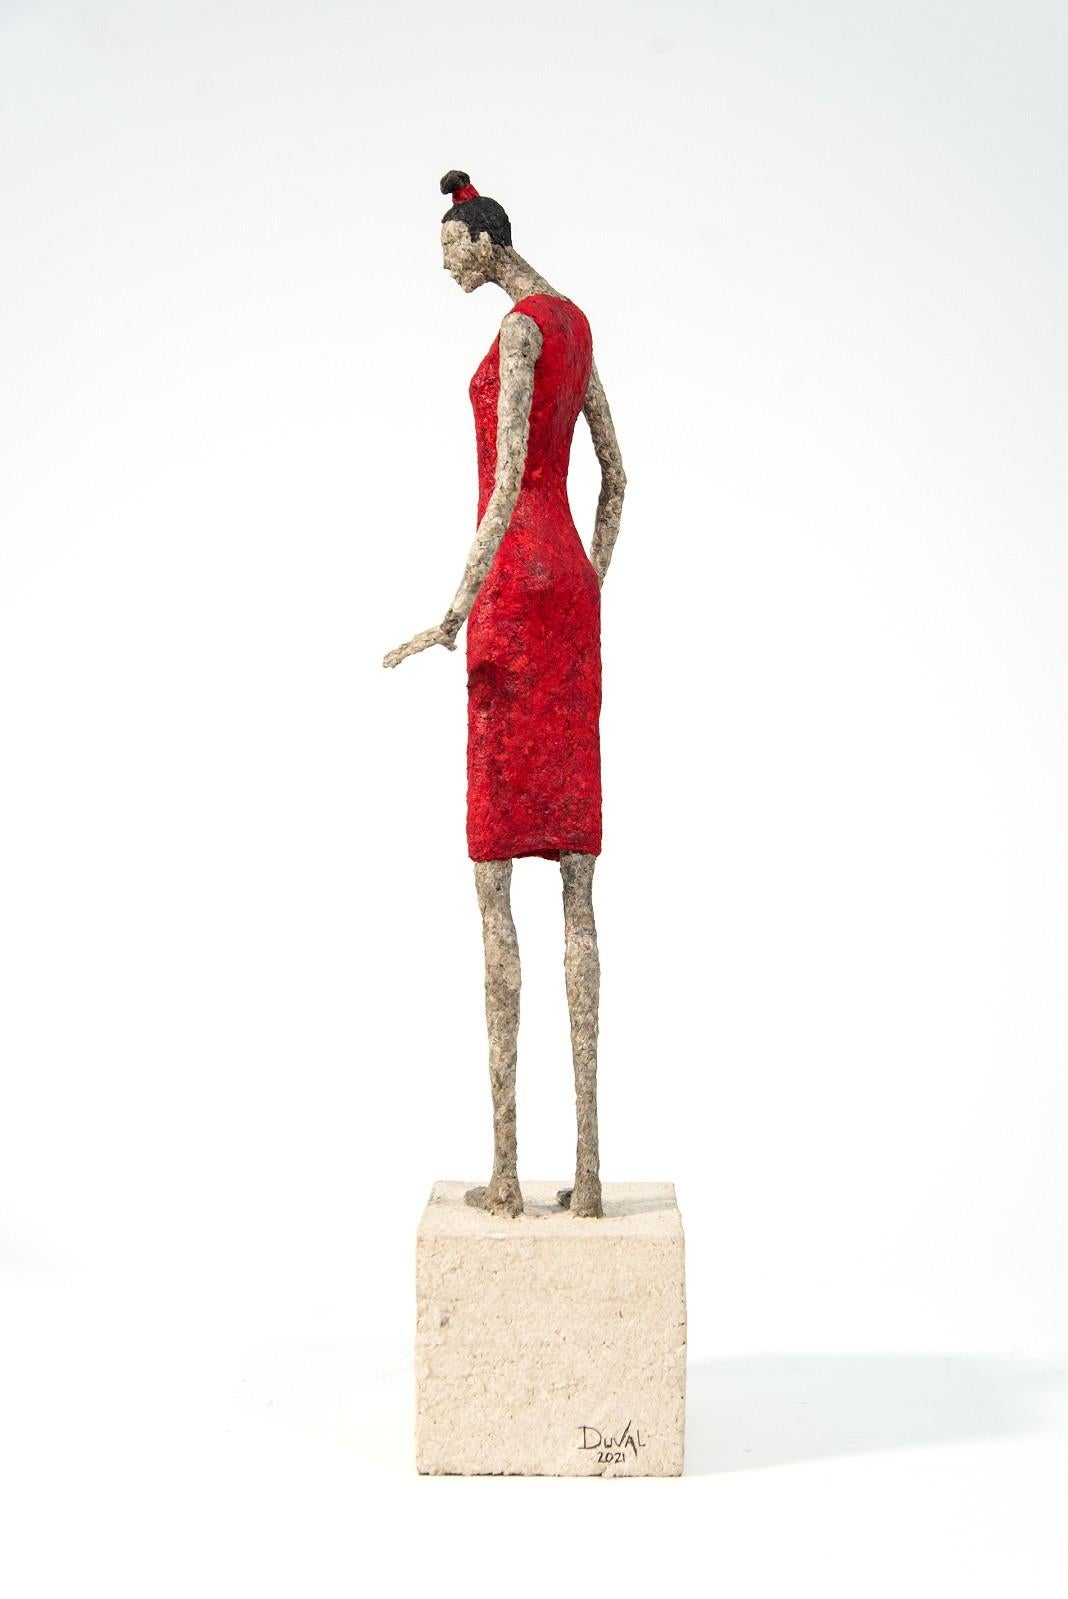 Francoise - expressive, textured, figurative, female, paper mache sculpture - Contemporary Sculpture by Paul Duval